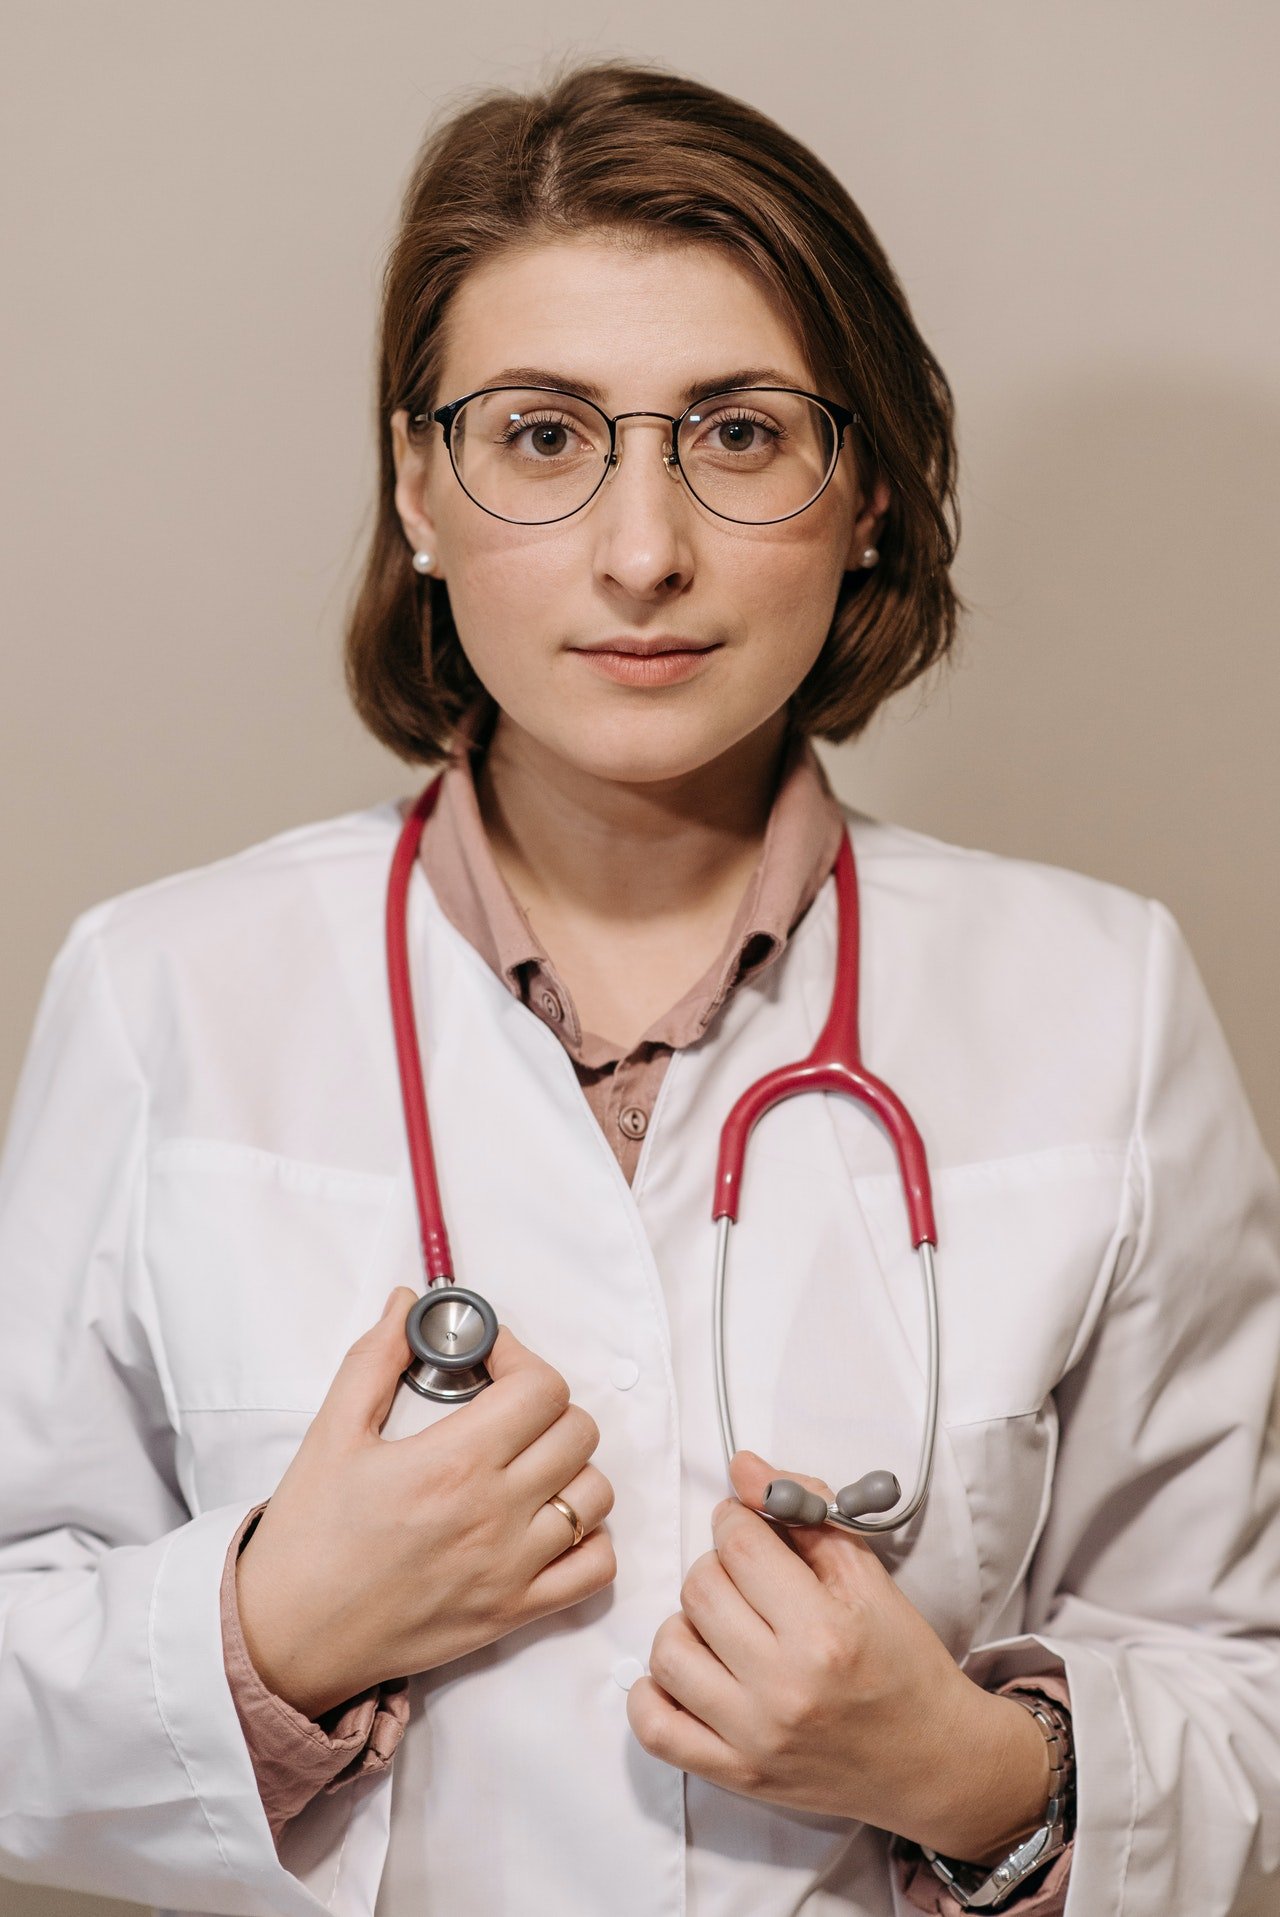 Doctora. | Foto: Pexels